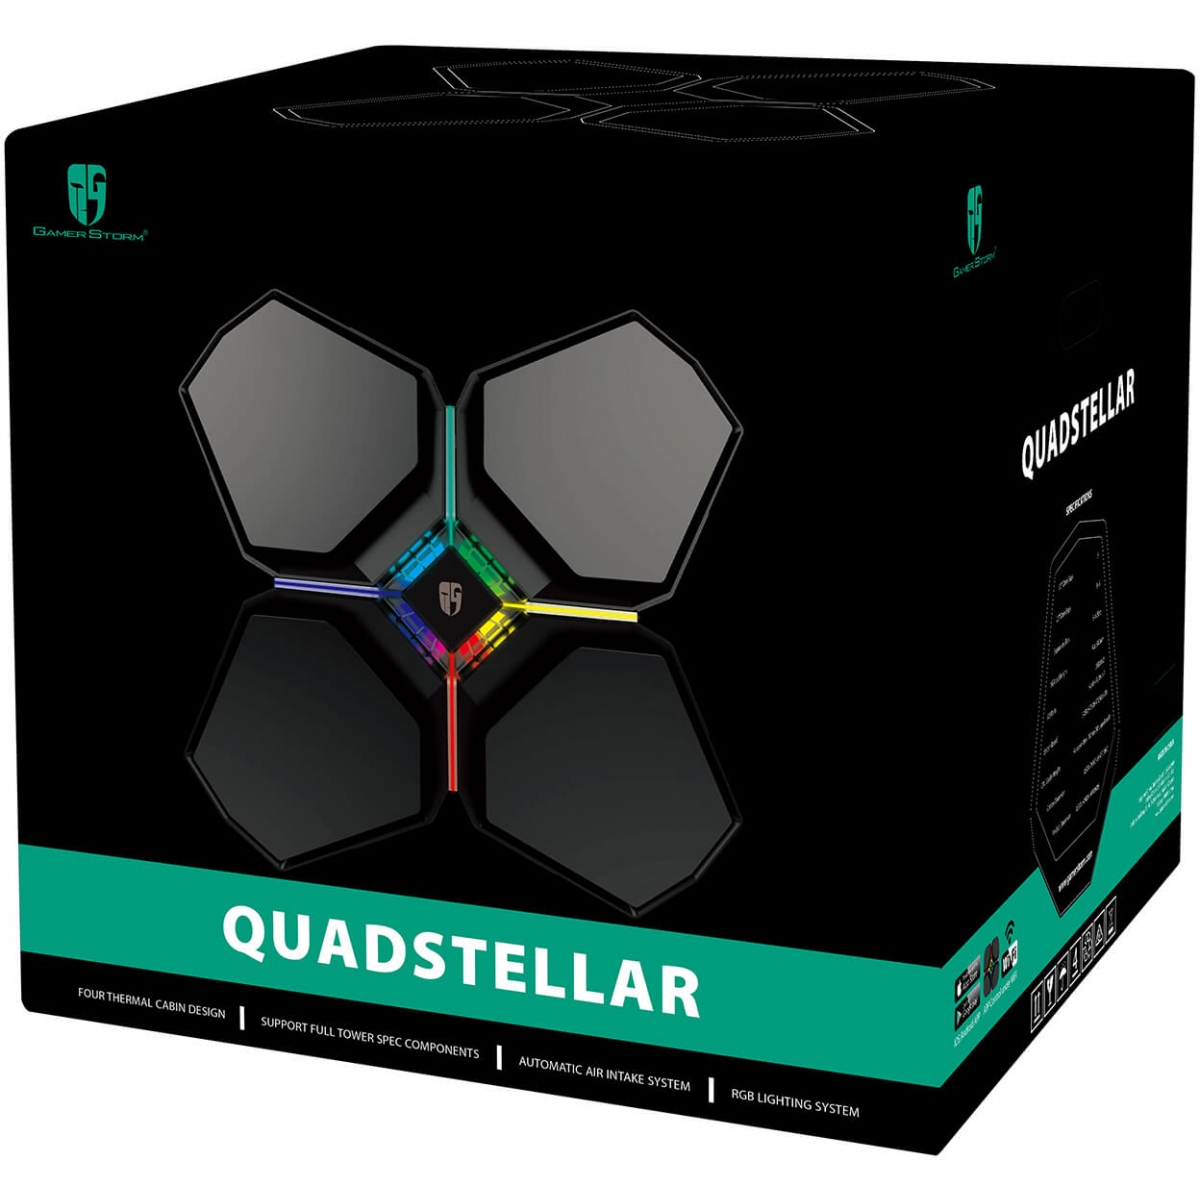 Gabinete Gamer DeepCool Quadstellar RGB, Full Tower, Vidro Temperado, Black, S-Fonte, DP-EATX-QUADSTLR